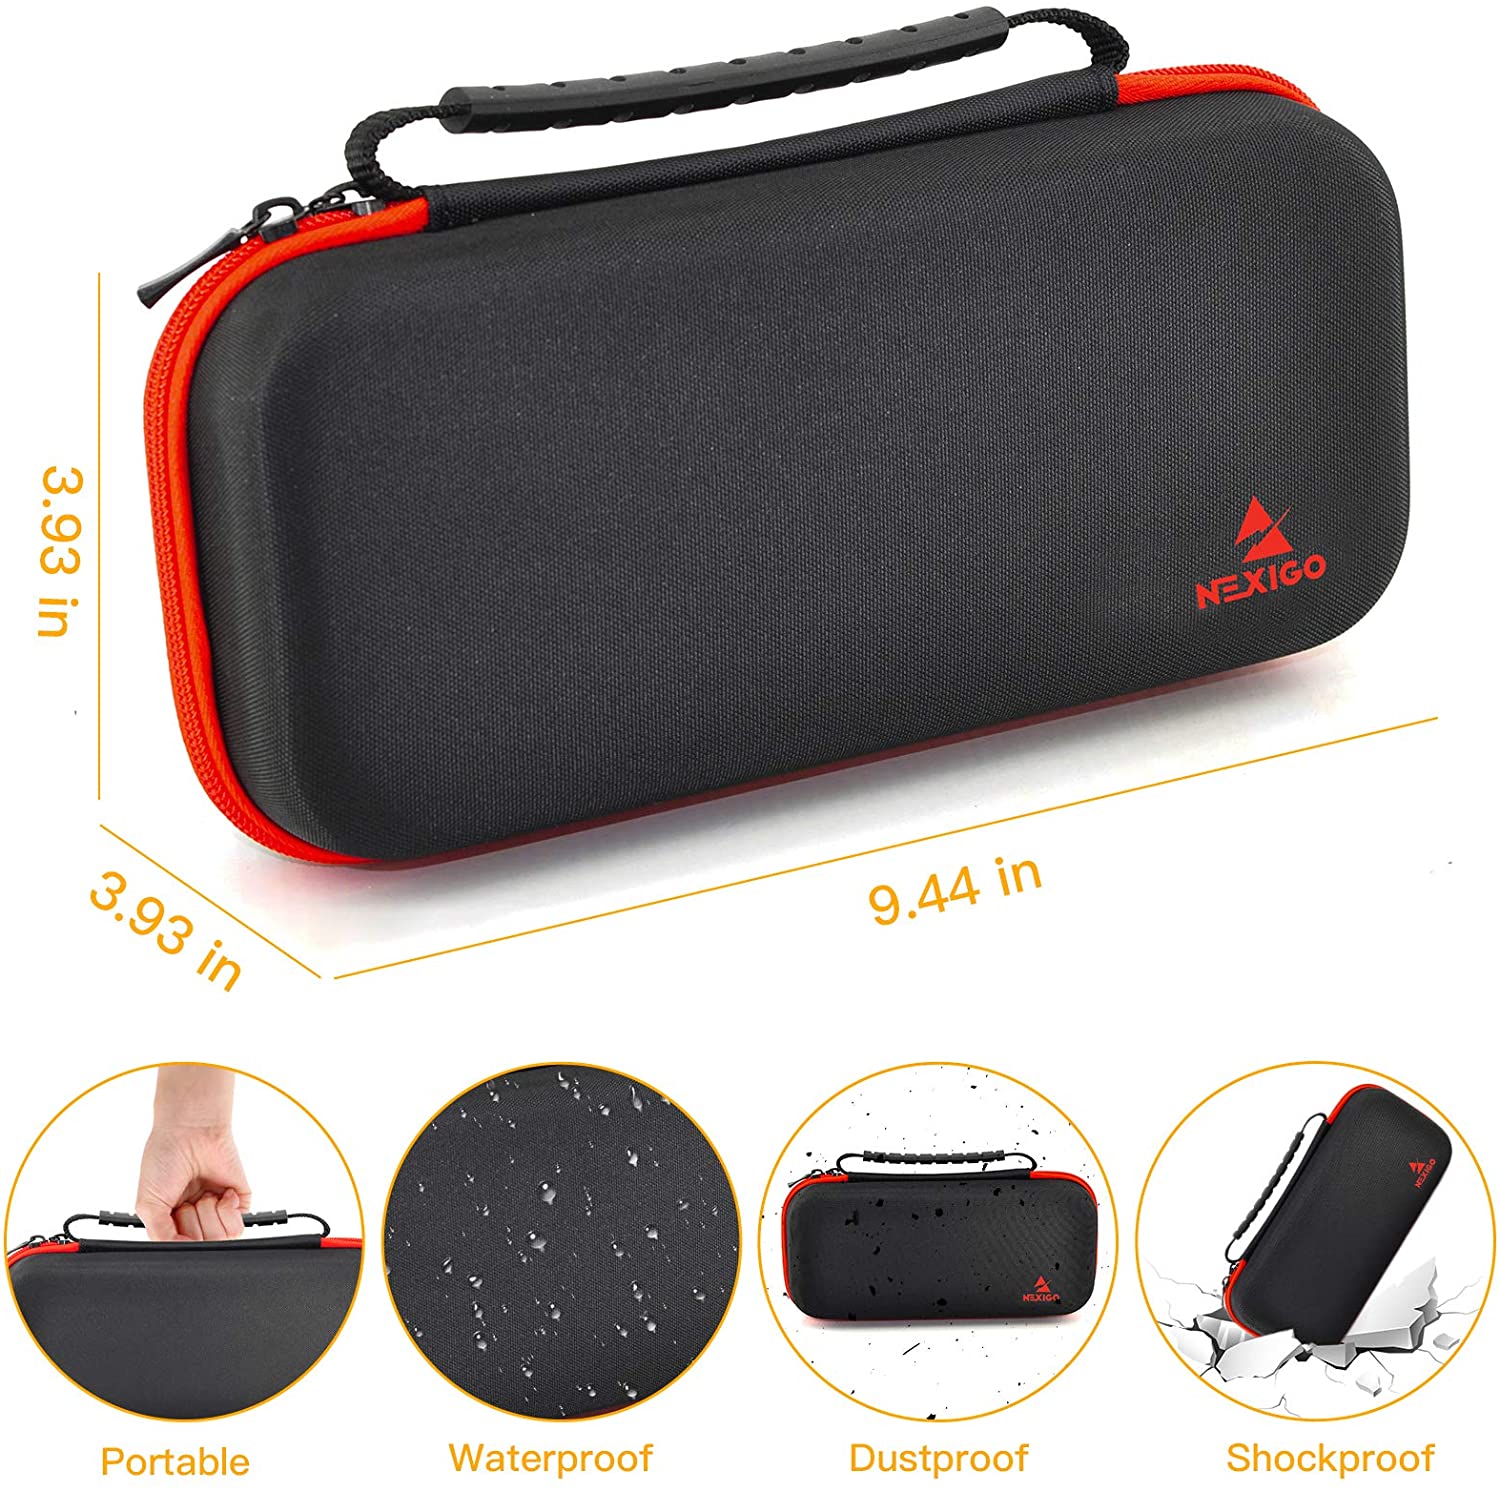 Carrying case is portable, waterproof, dustproof, and shockproof.